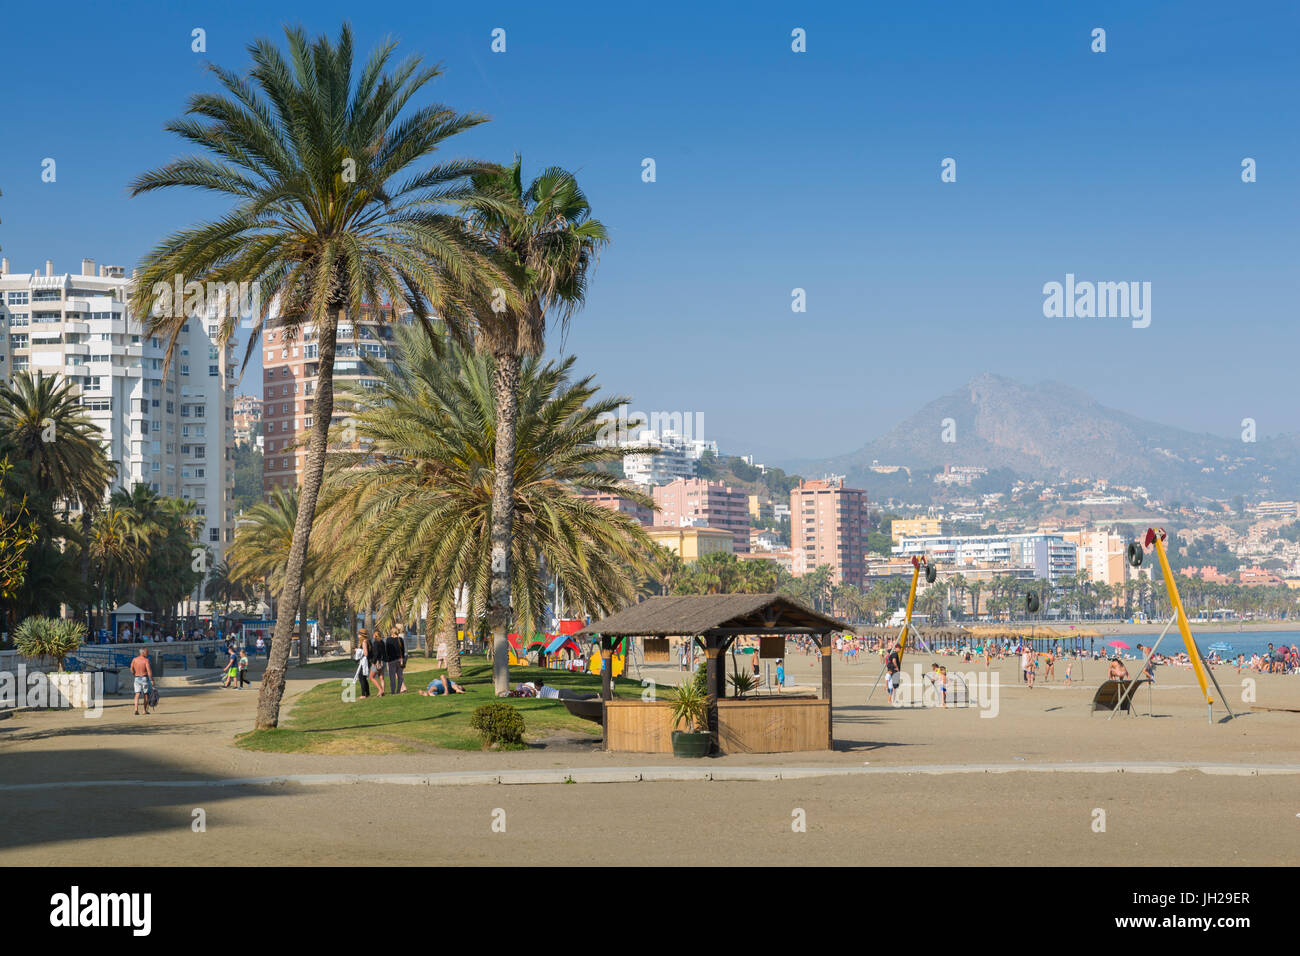 Plage urbaine populaire de Playa de la Malagueta, Malaga, Costa del Sol, Andalousie, Espagne, Europe Banque D'Images